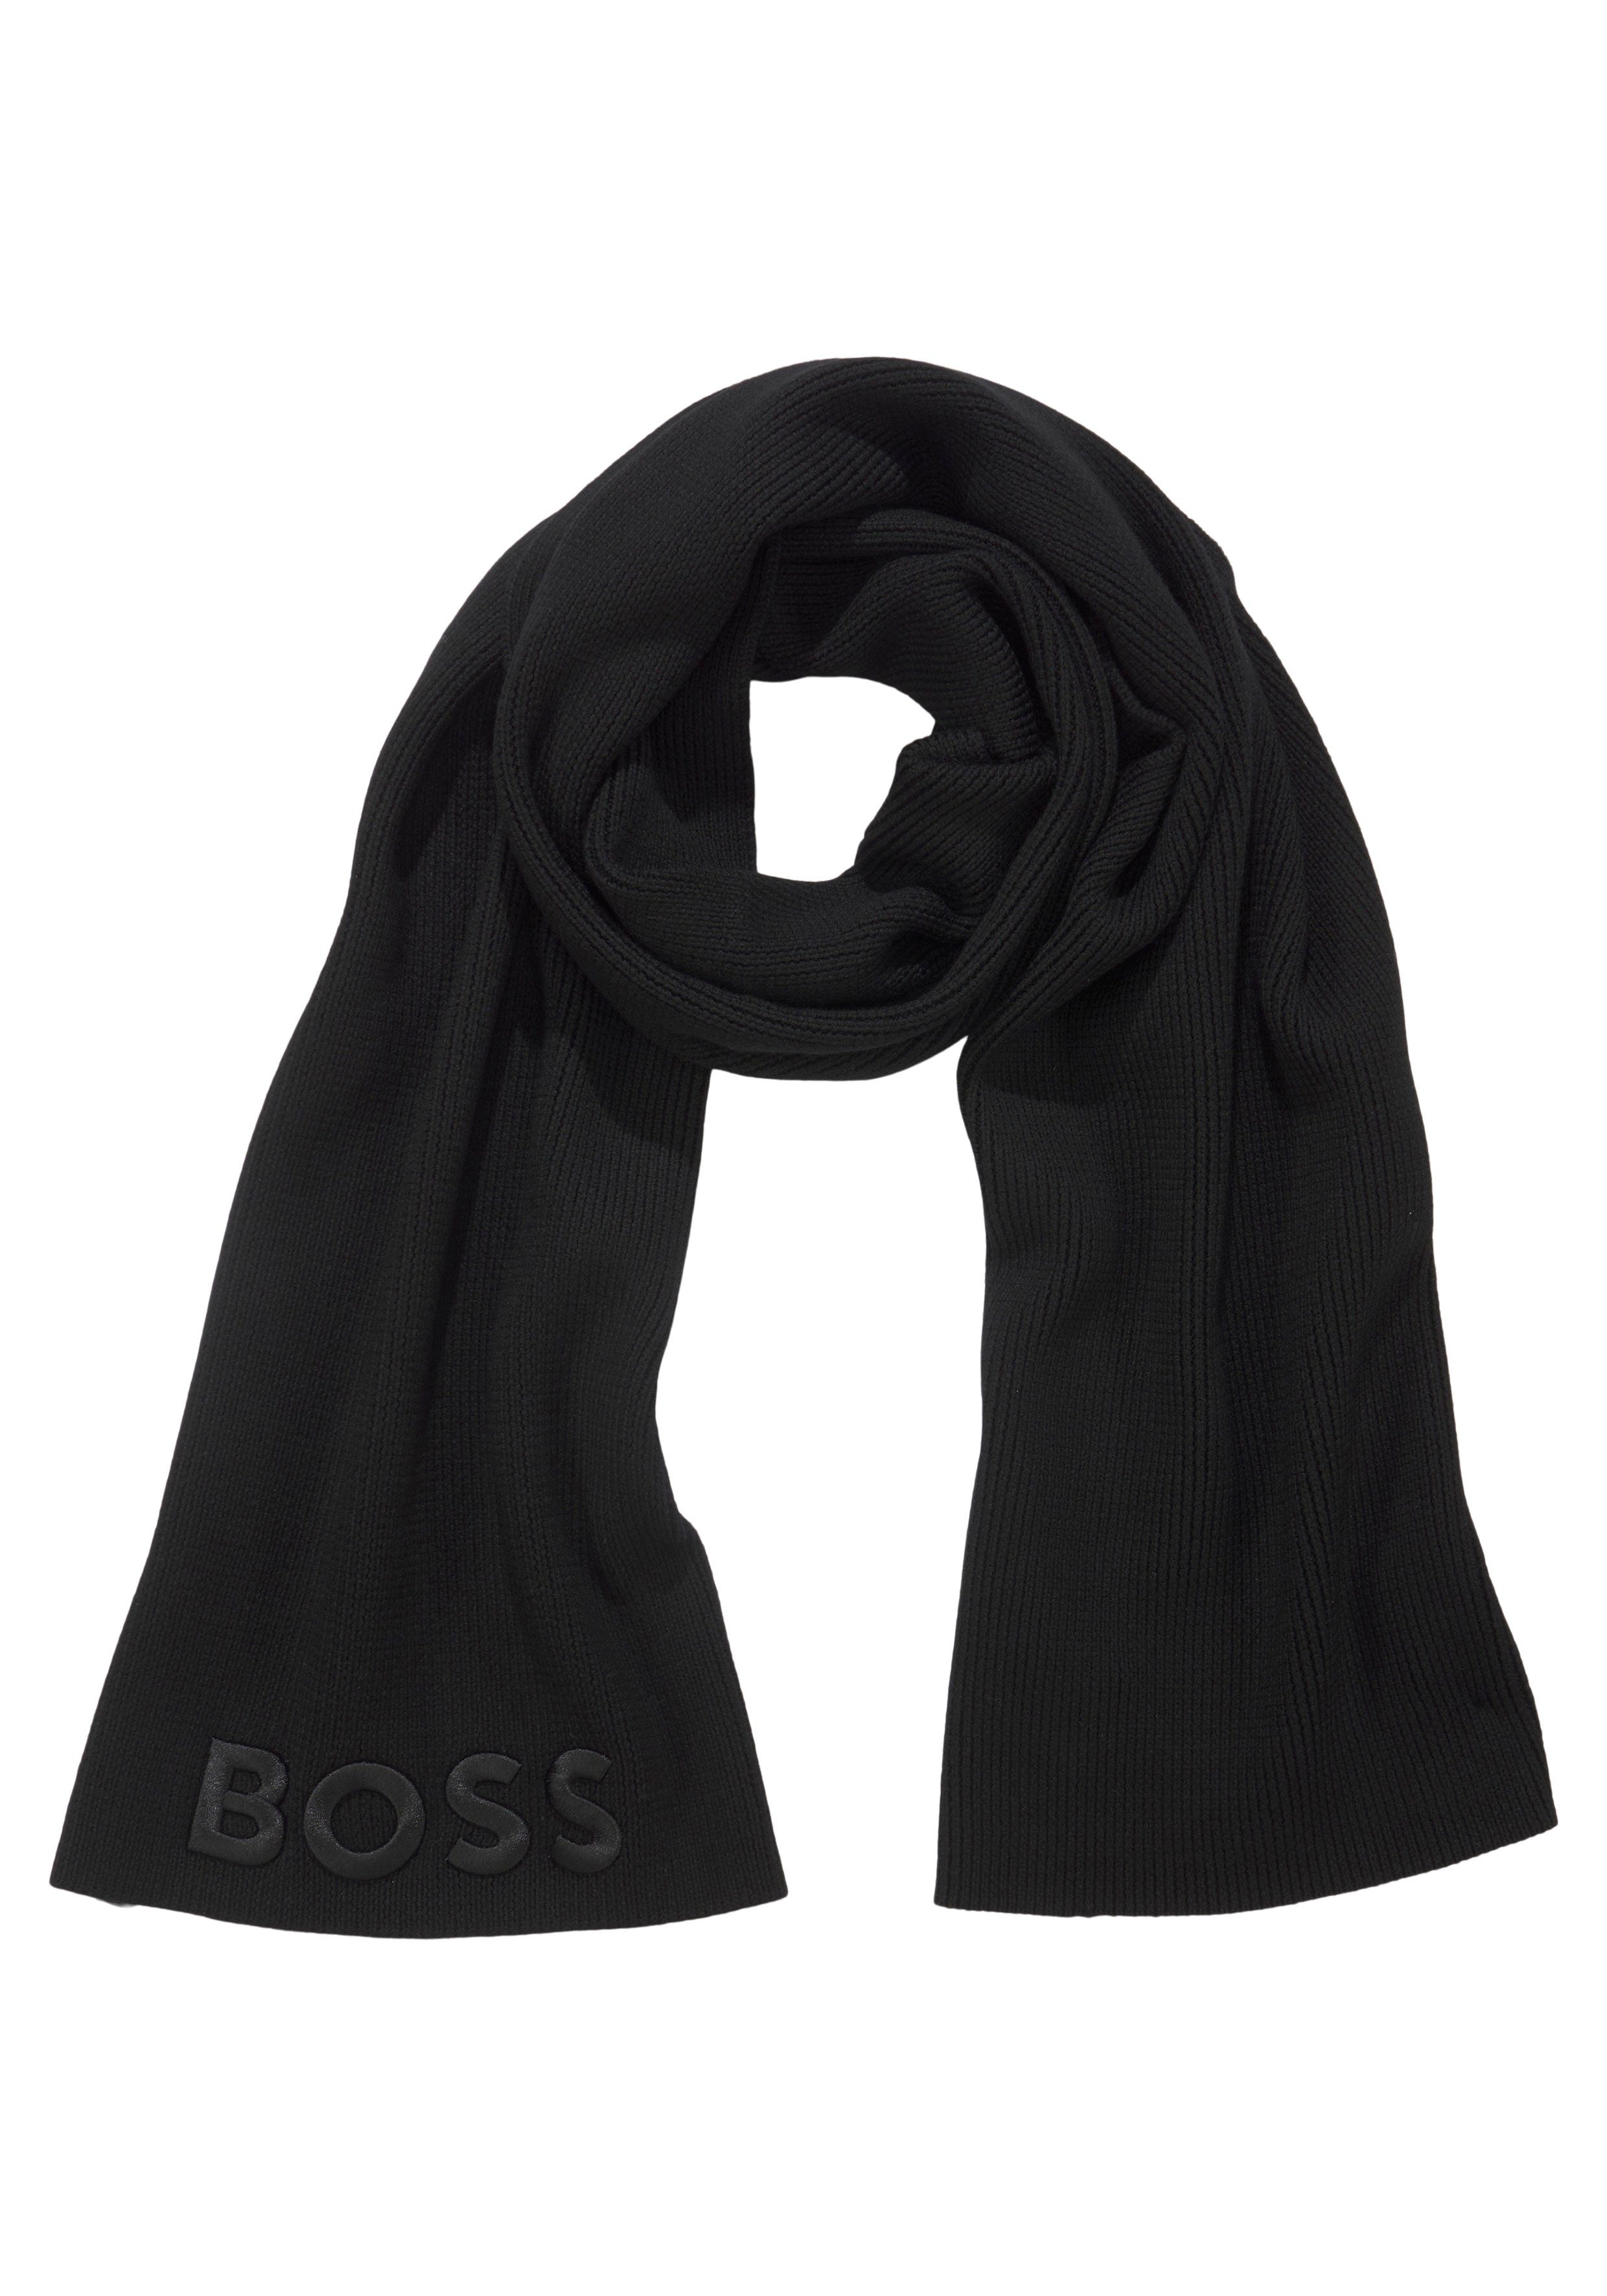 Boss Black BOSS von Womanswear Logo-Stickerei, mit BOSS tonaler Schal Lara_scarf, Schal